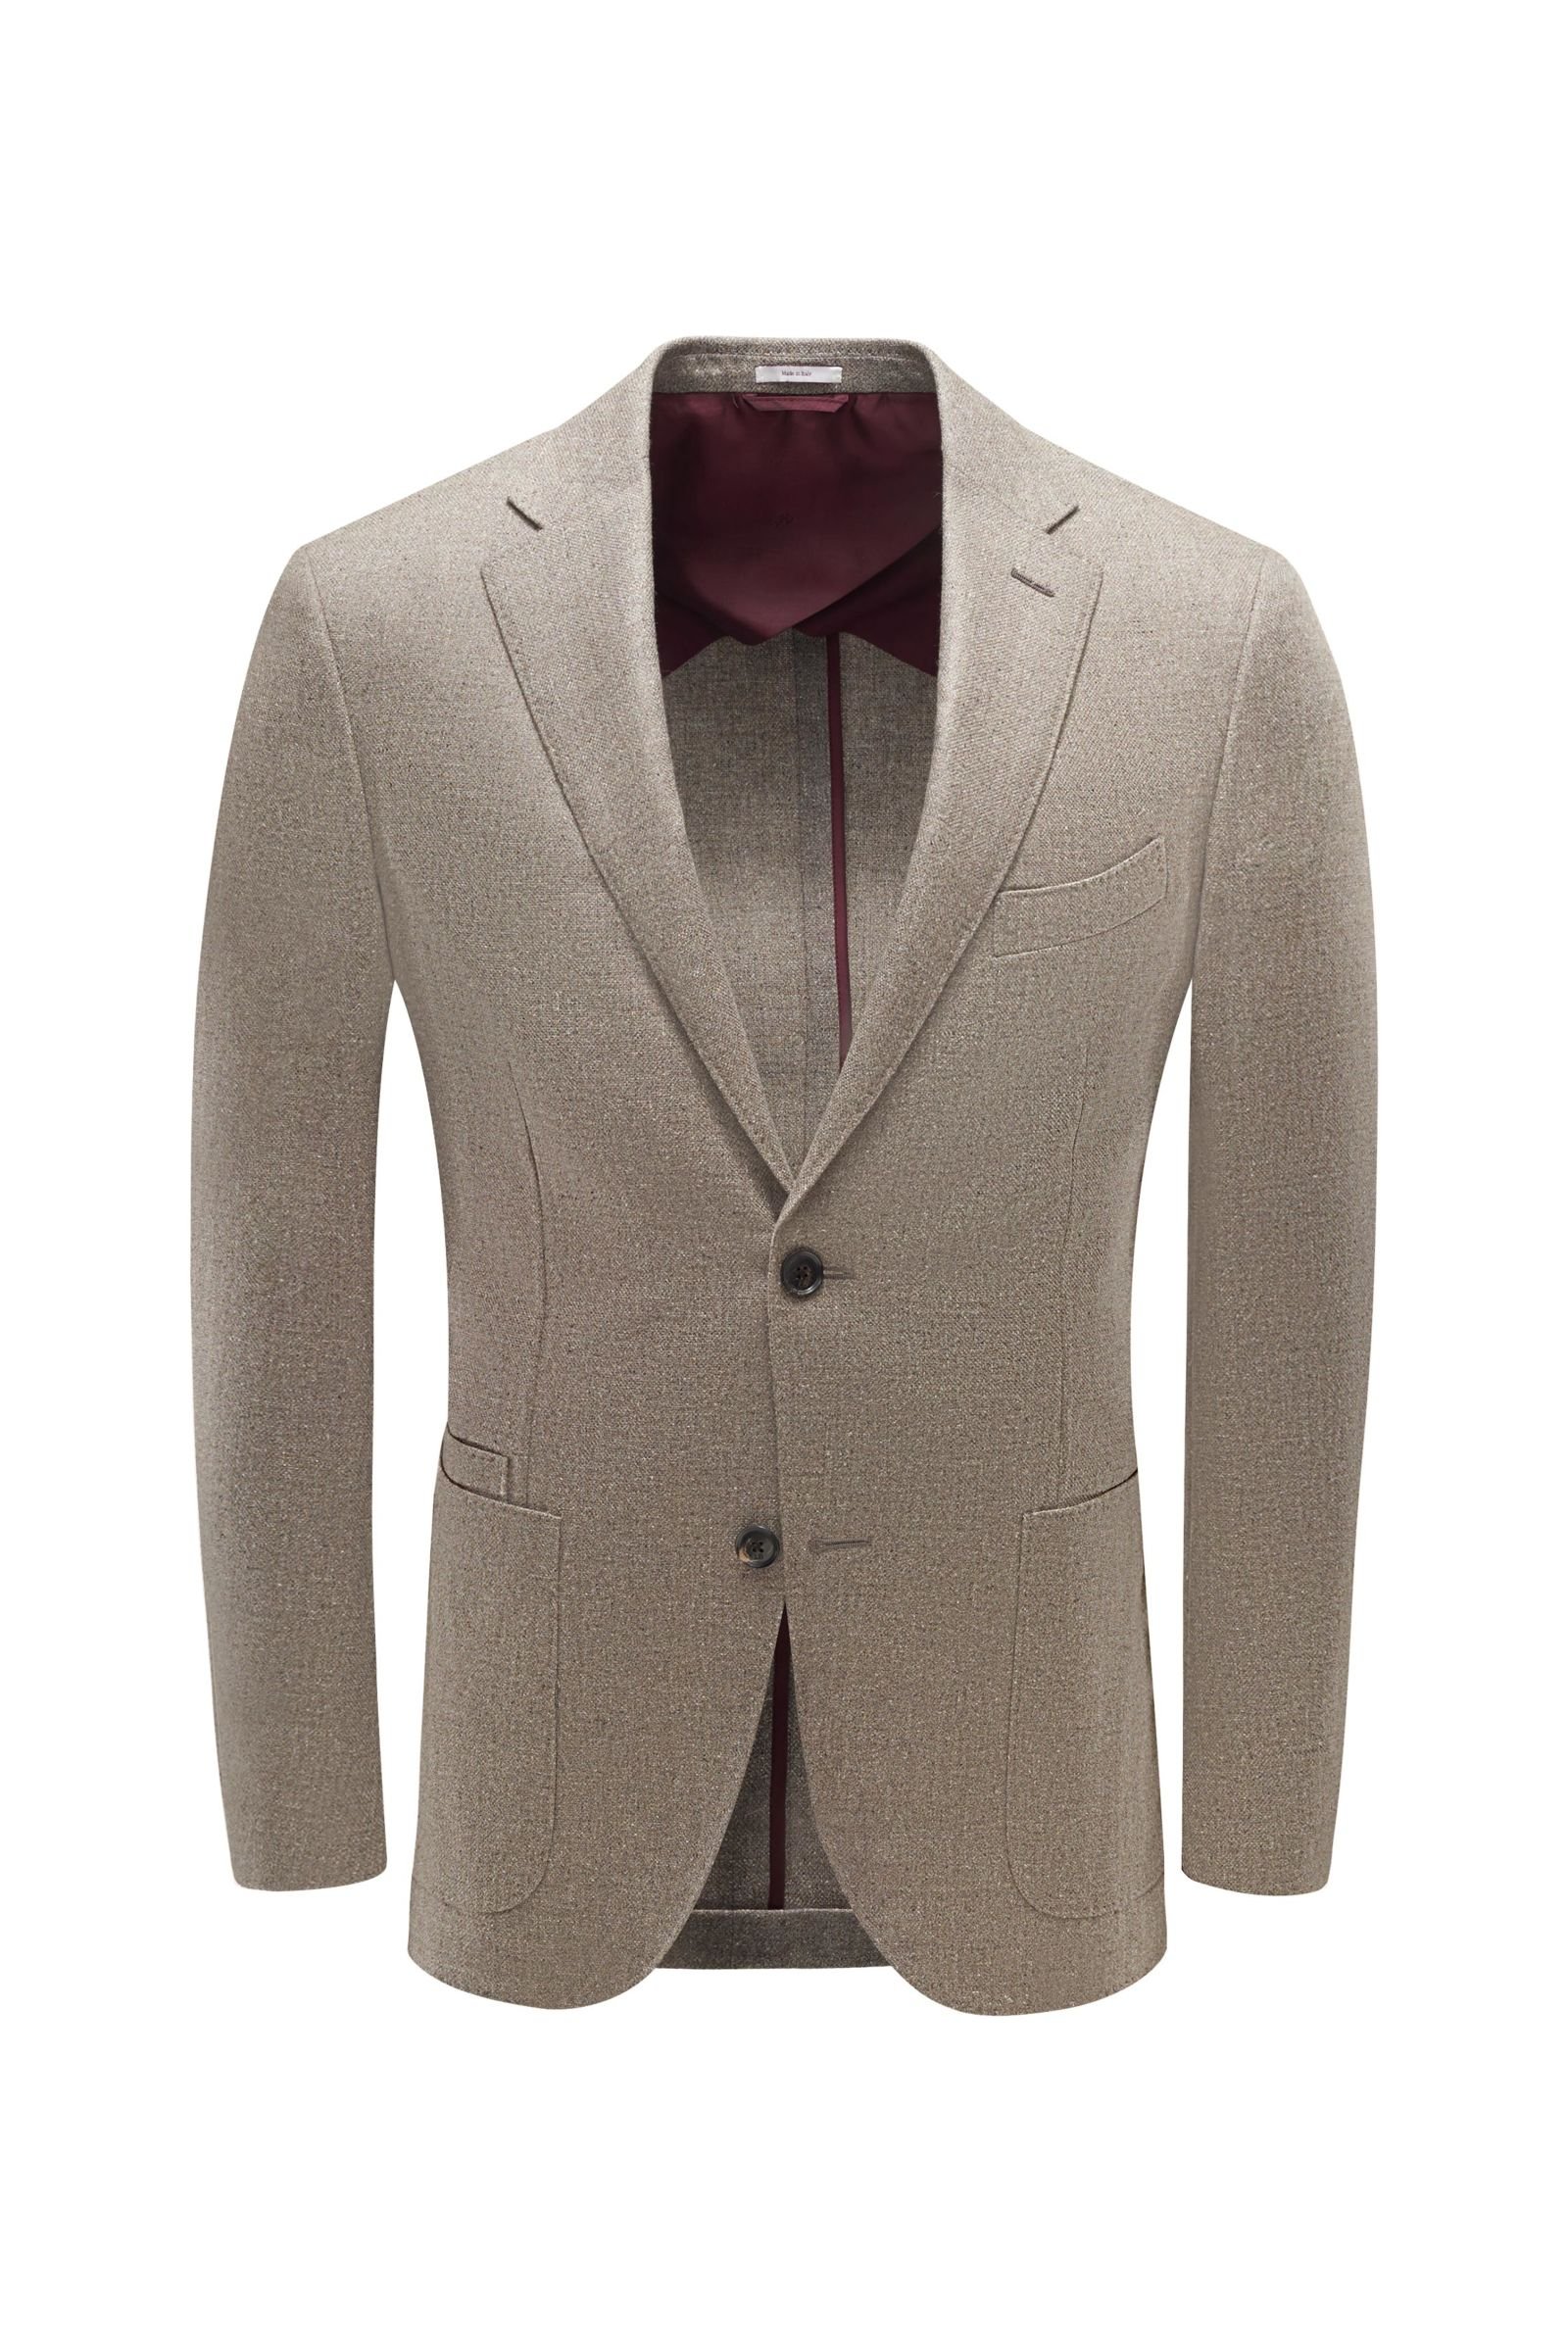 Smart-casual jacket grey-brown